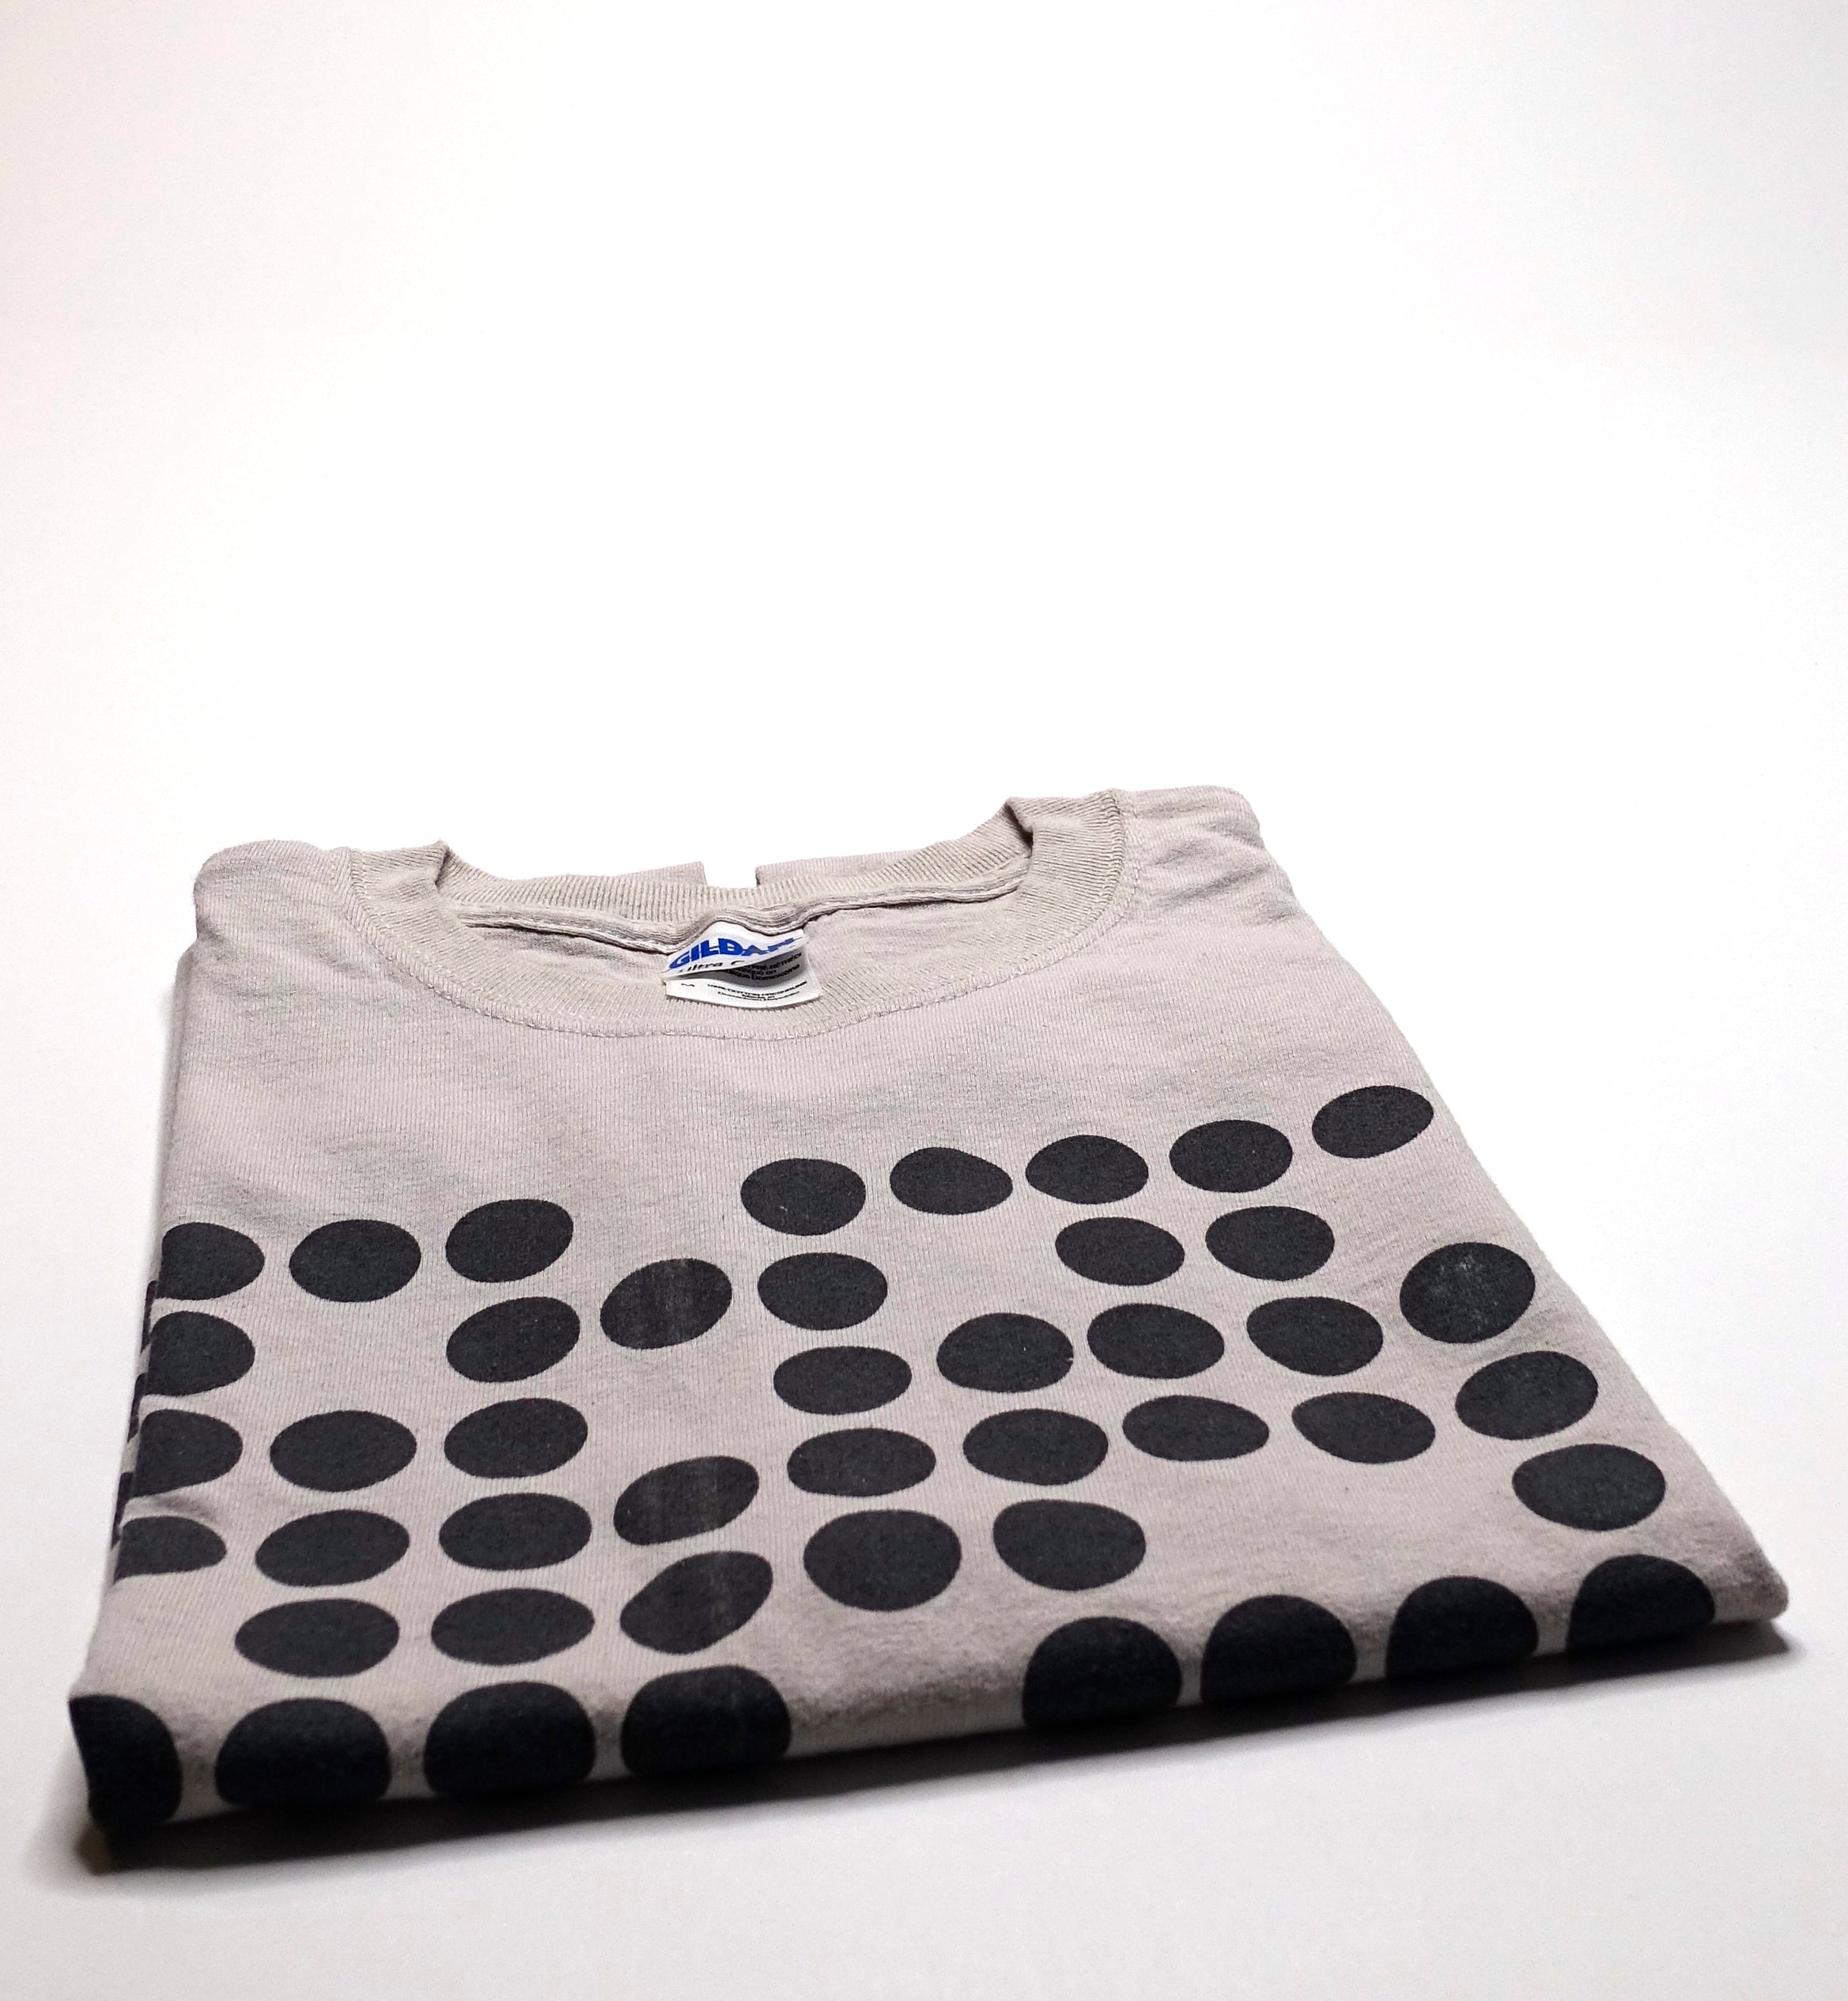 Man Overboard - Brail Design 2010 Tour Shirt Size Medium